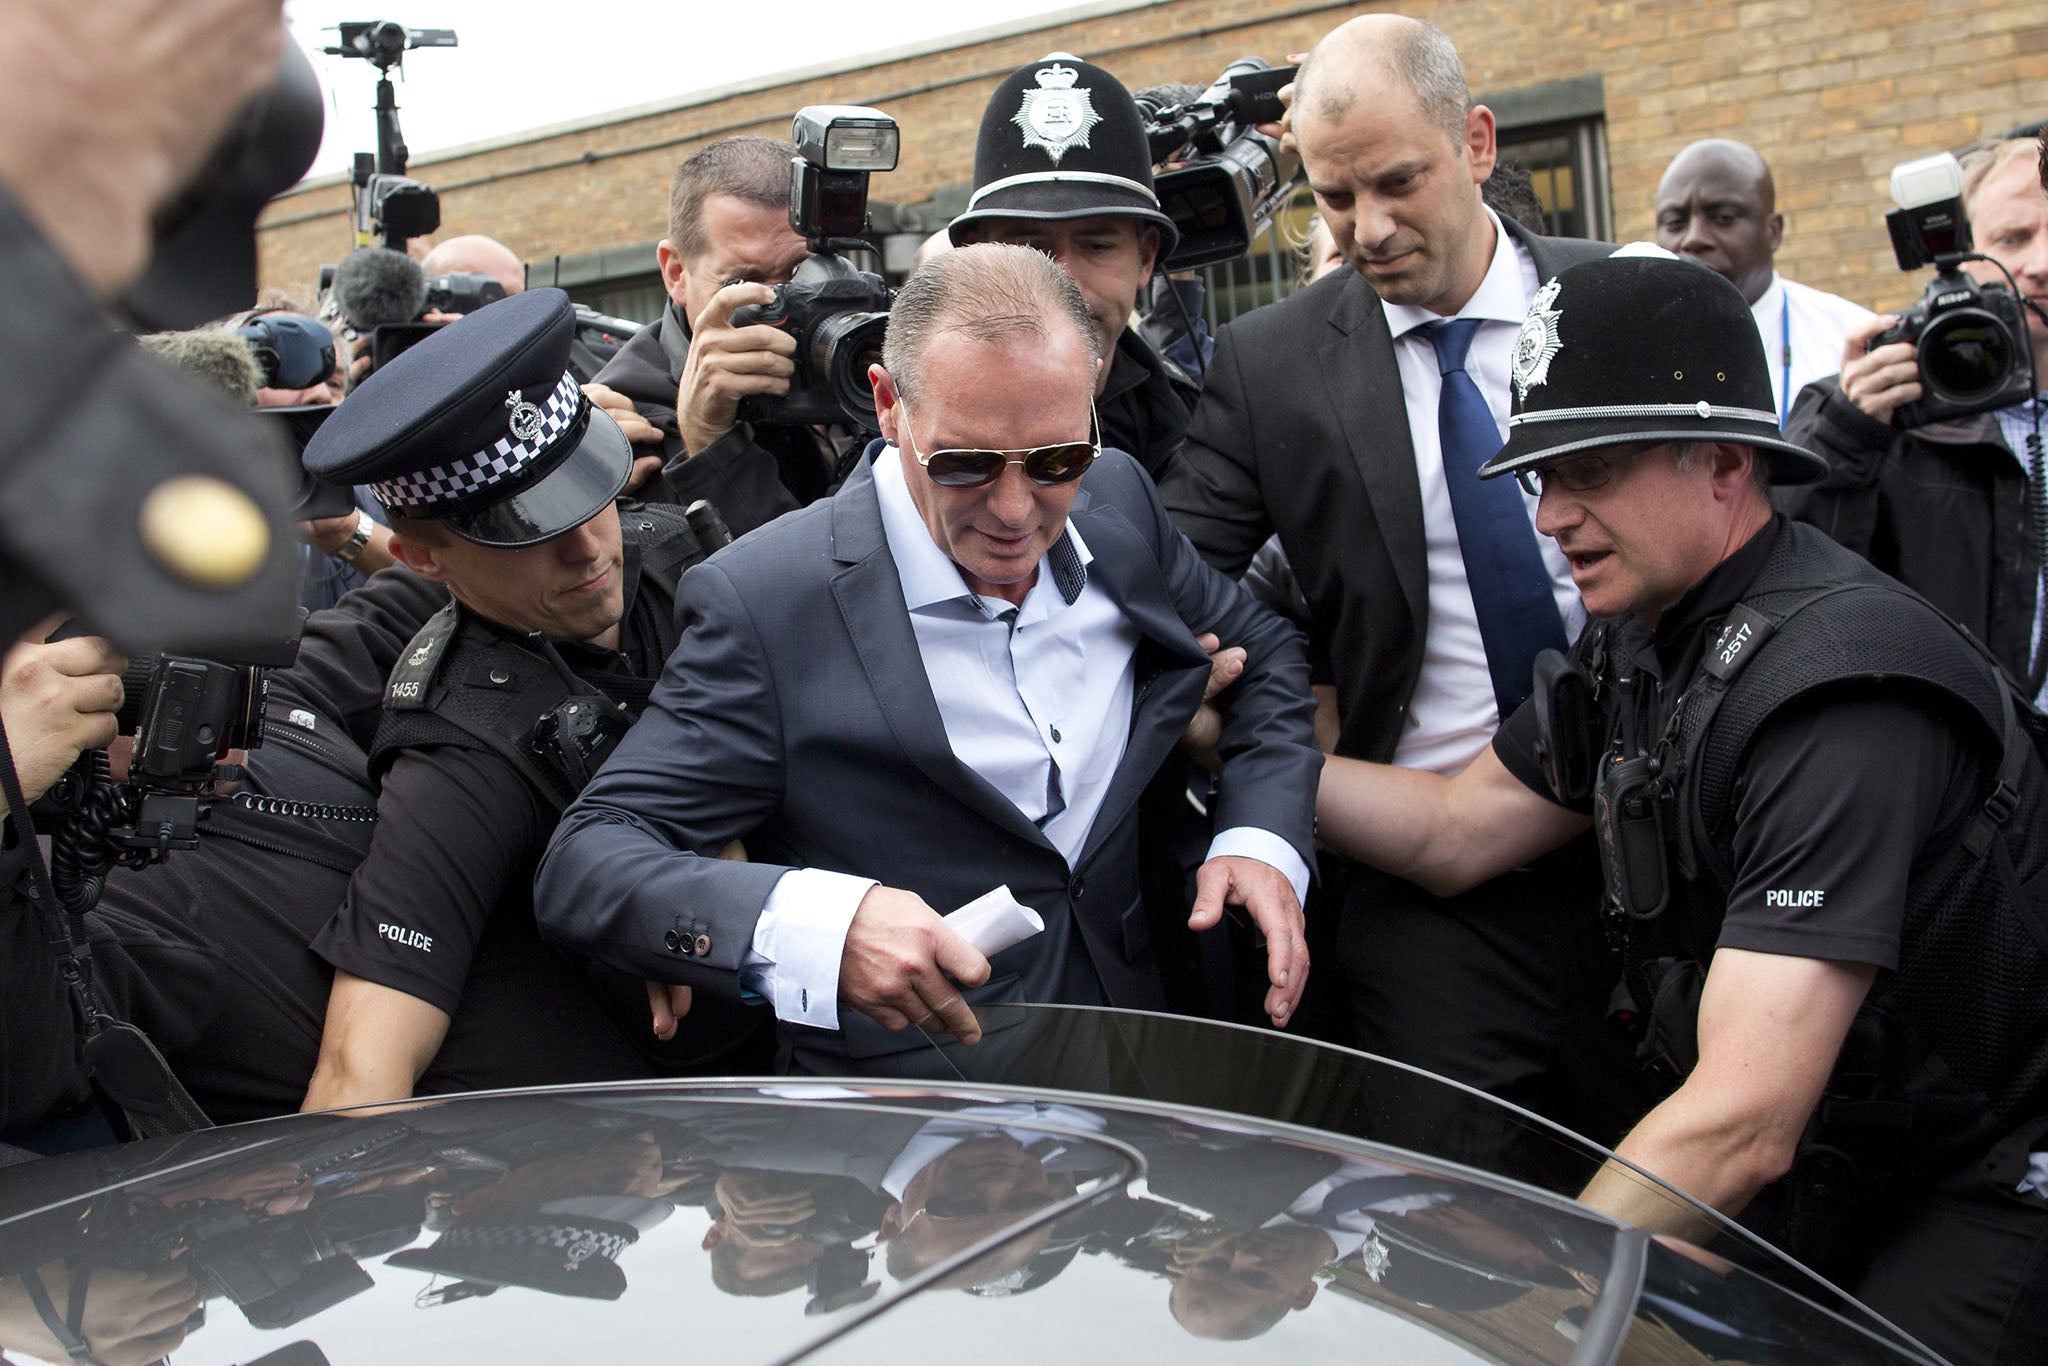 Former England footballer Paul Gascoigne, 47, was arrested at his penthouse home in Sandbanks, Dorset, on 10 September